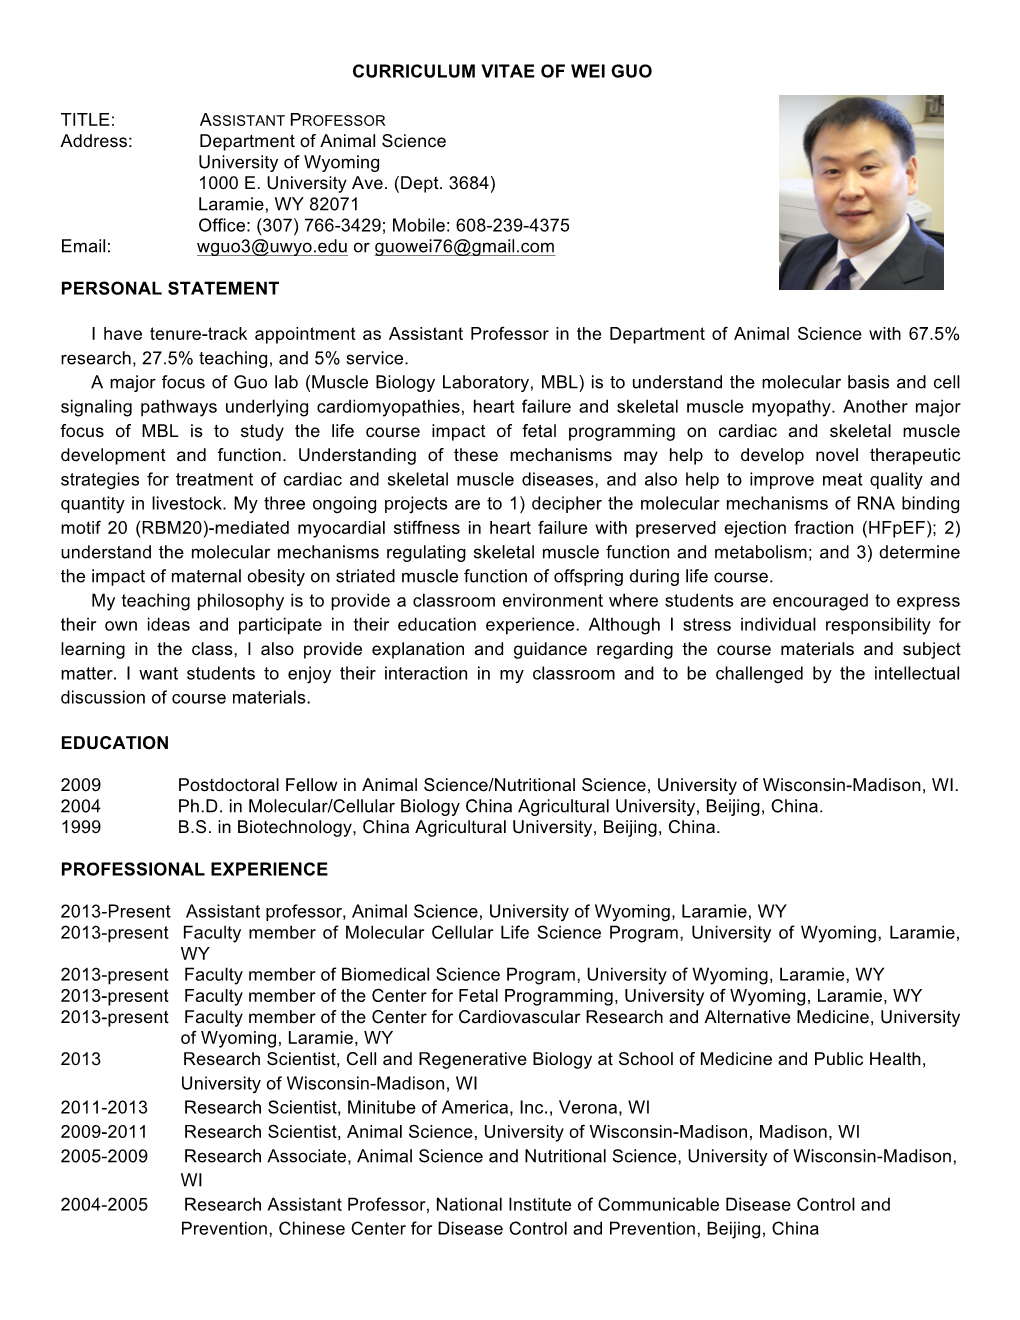 Curriculum Vitae of Wei Guo Title